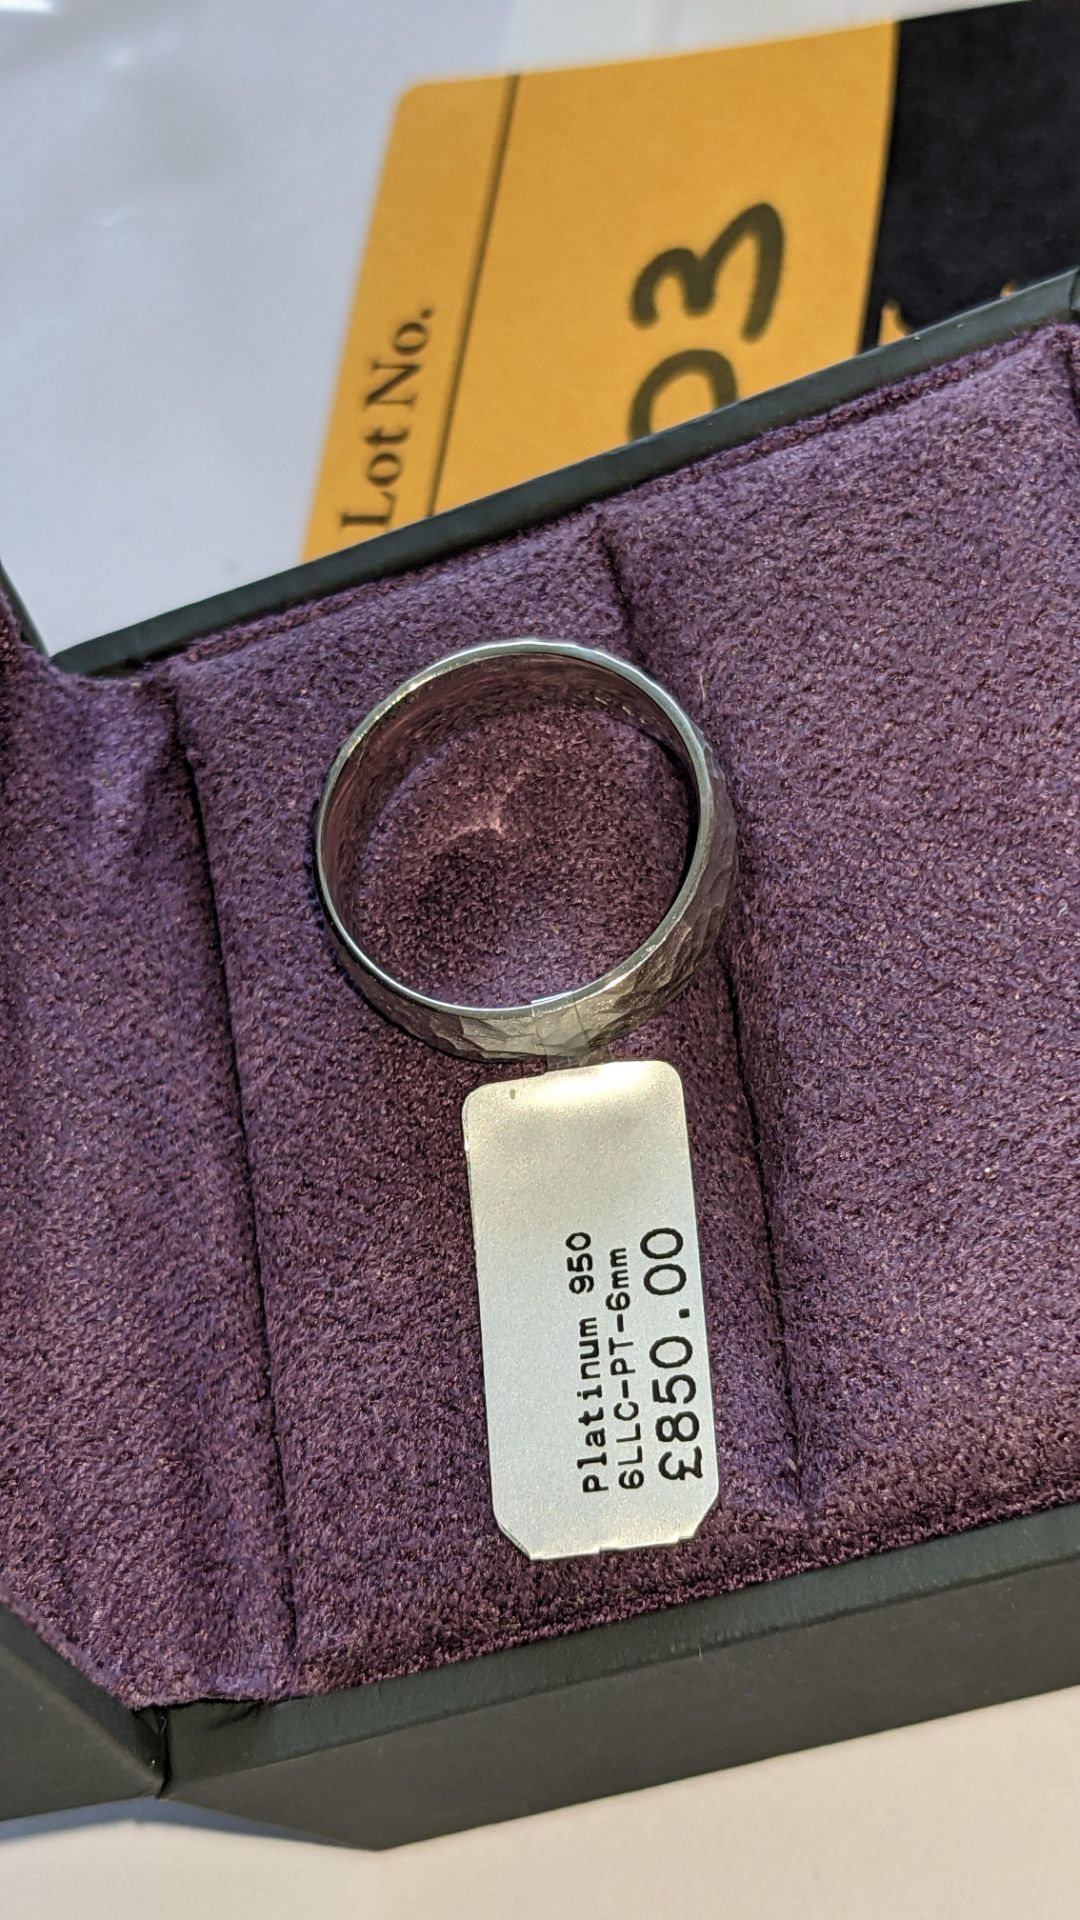 Platinum 950 6mm textured wedding ring. RRP £850 - Image 3 of 12